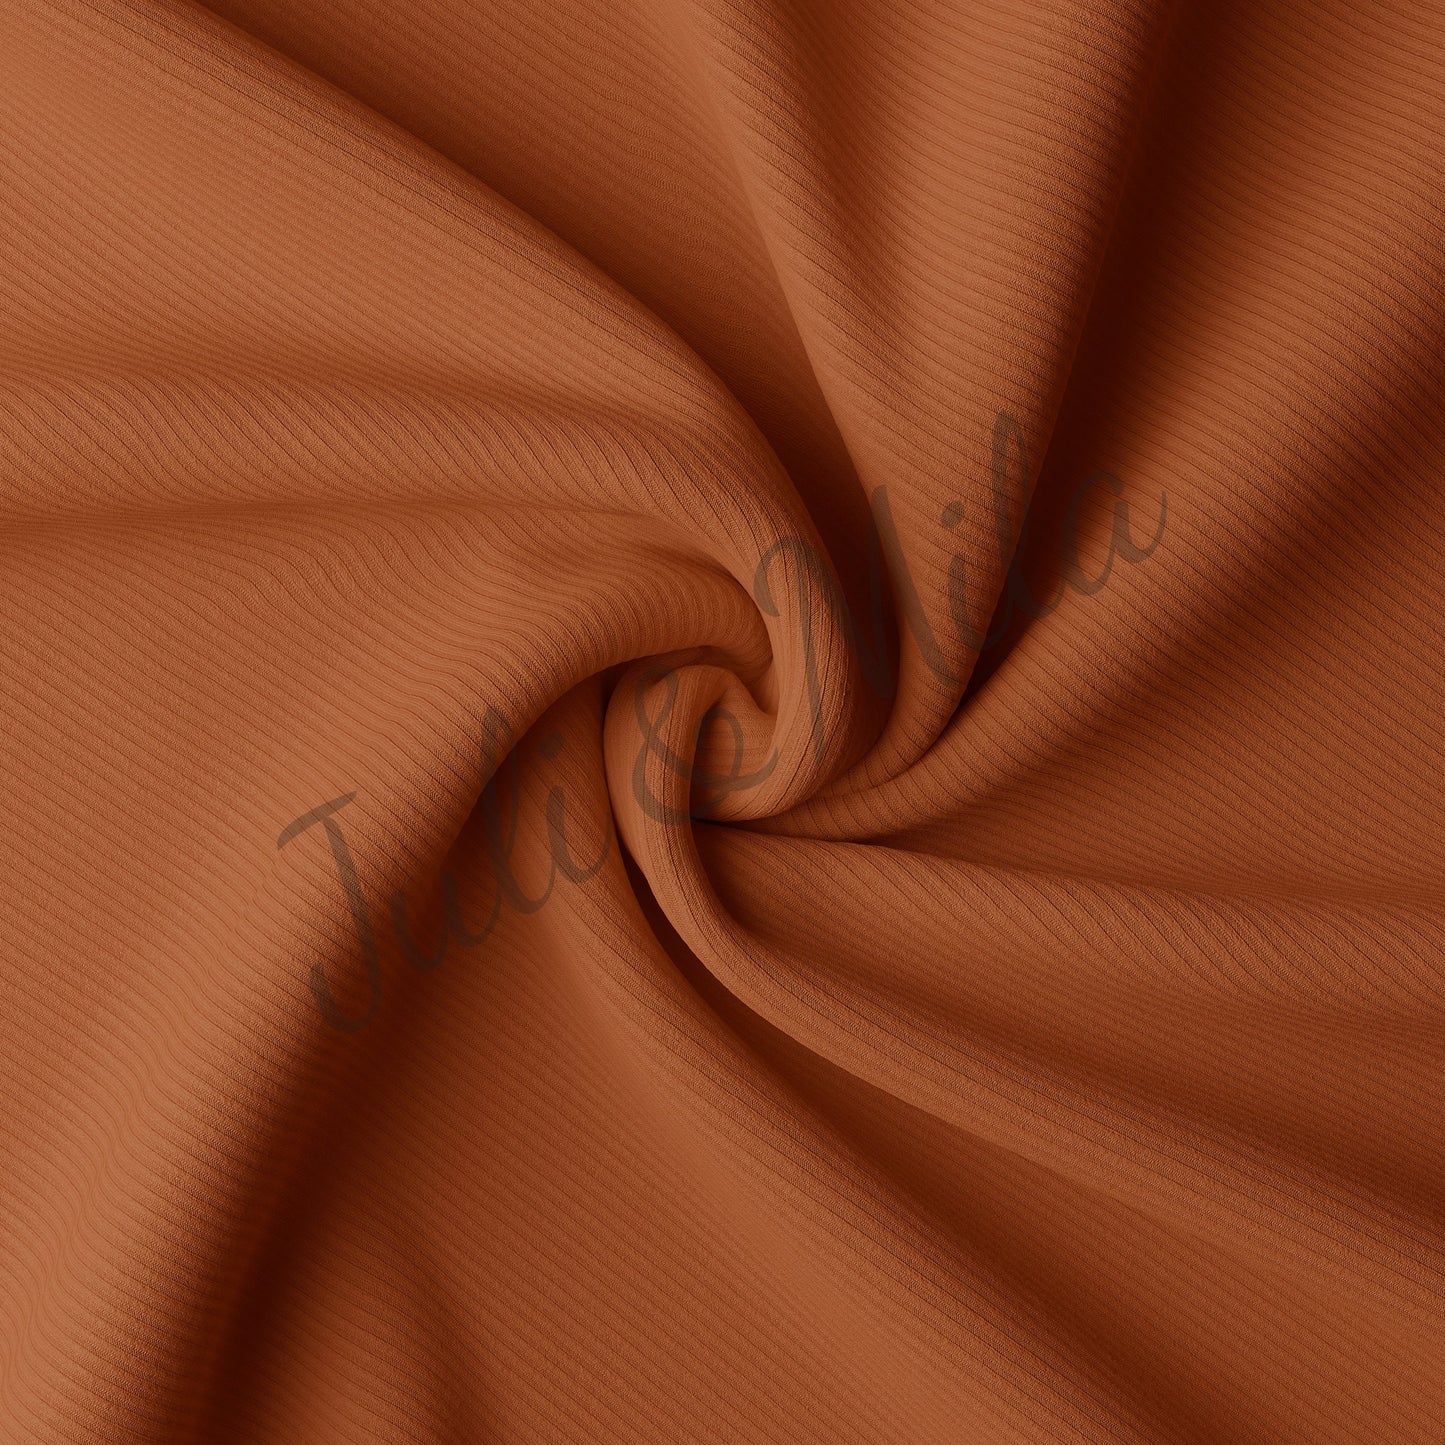 Cinnamon Stick Rib Knit Fabric by the Yard Ribbed Jersey Stretchy Soft Polyester Stretch Fabric 1 Yard